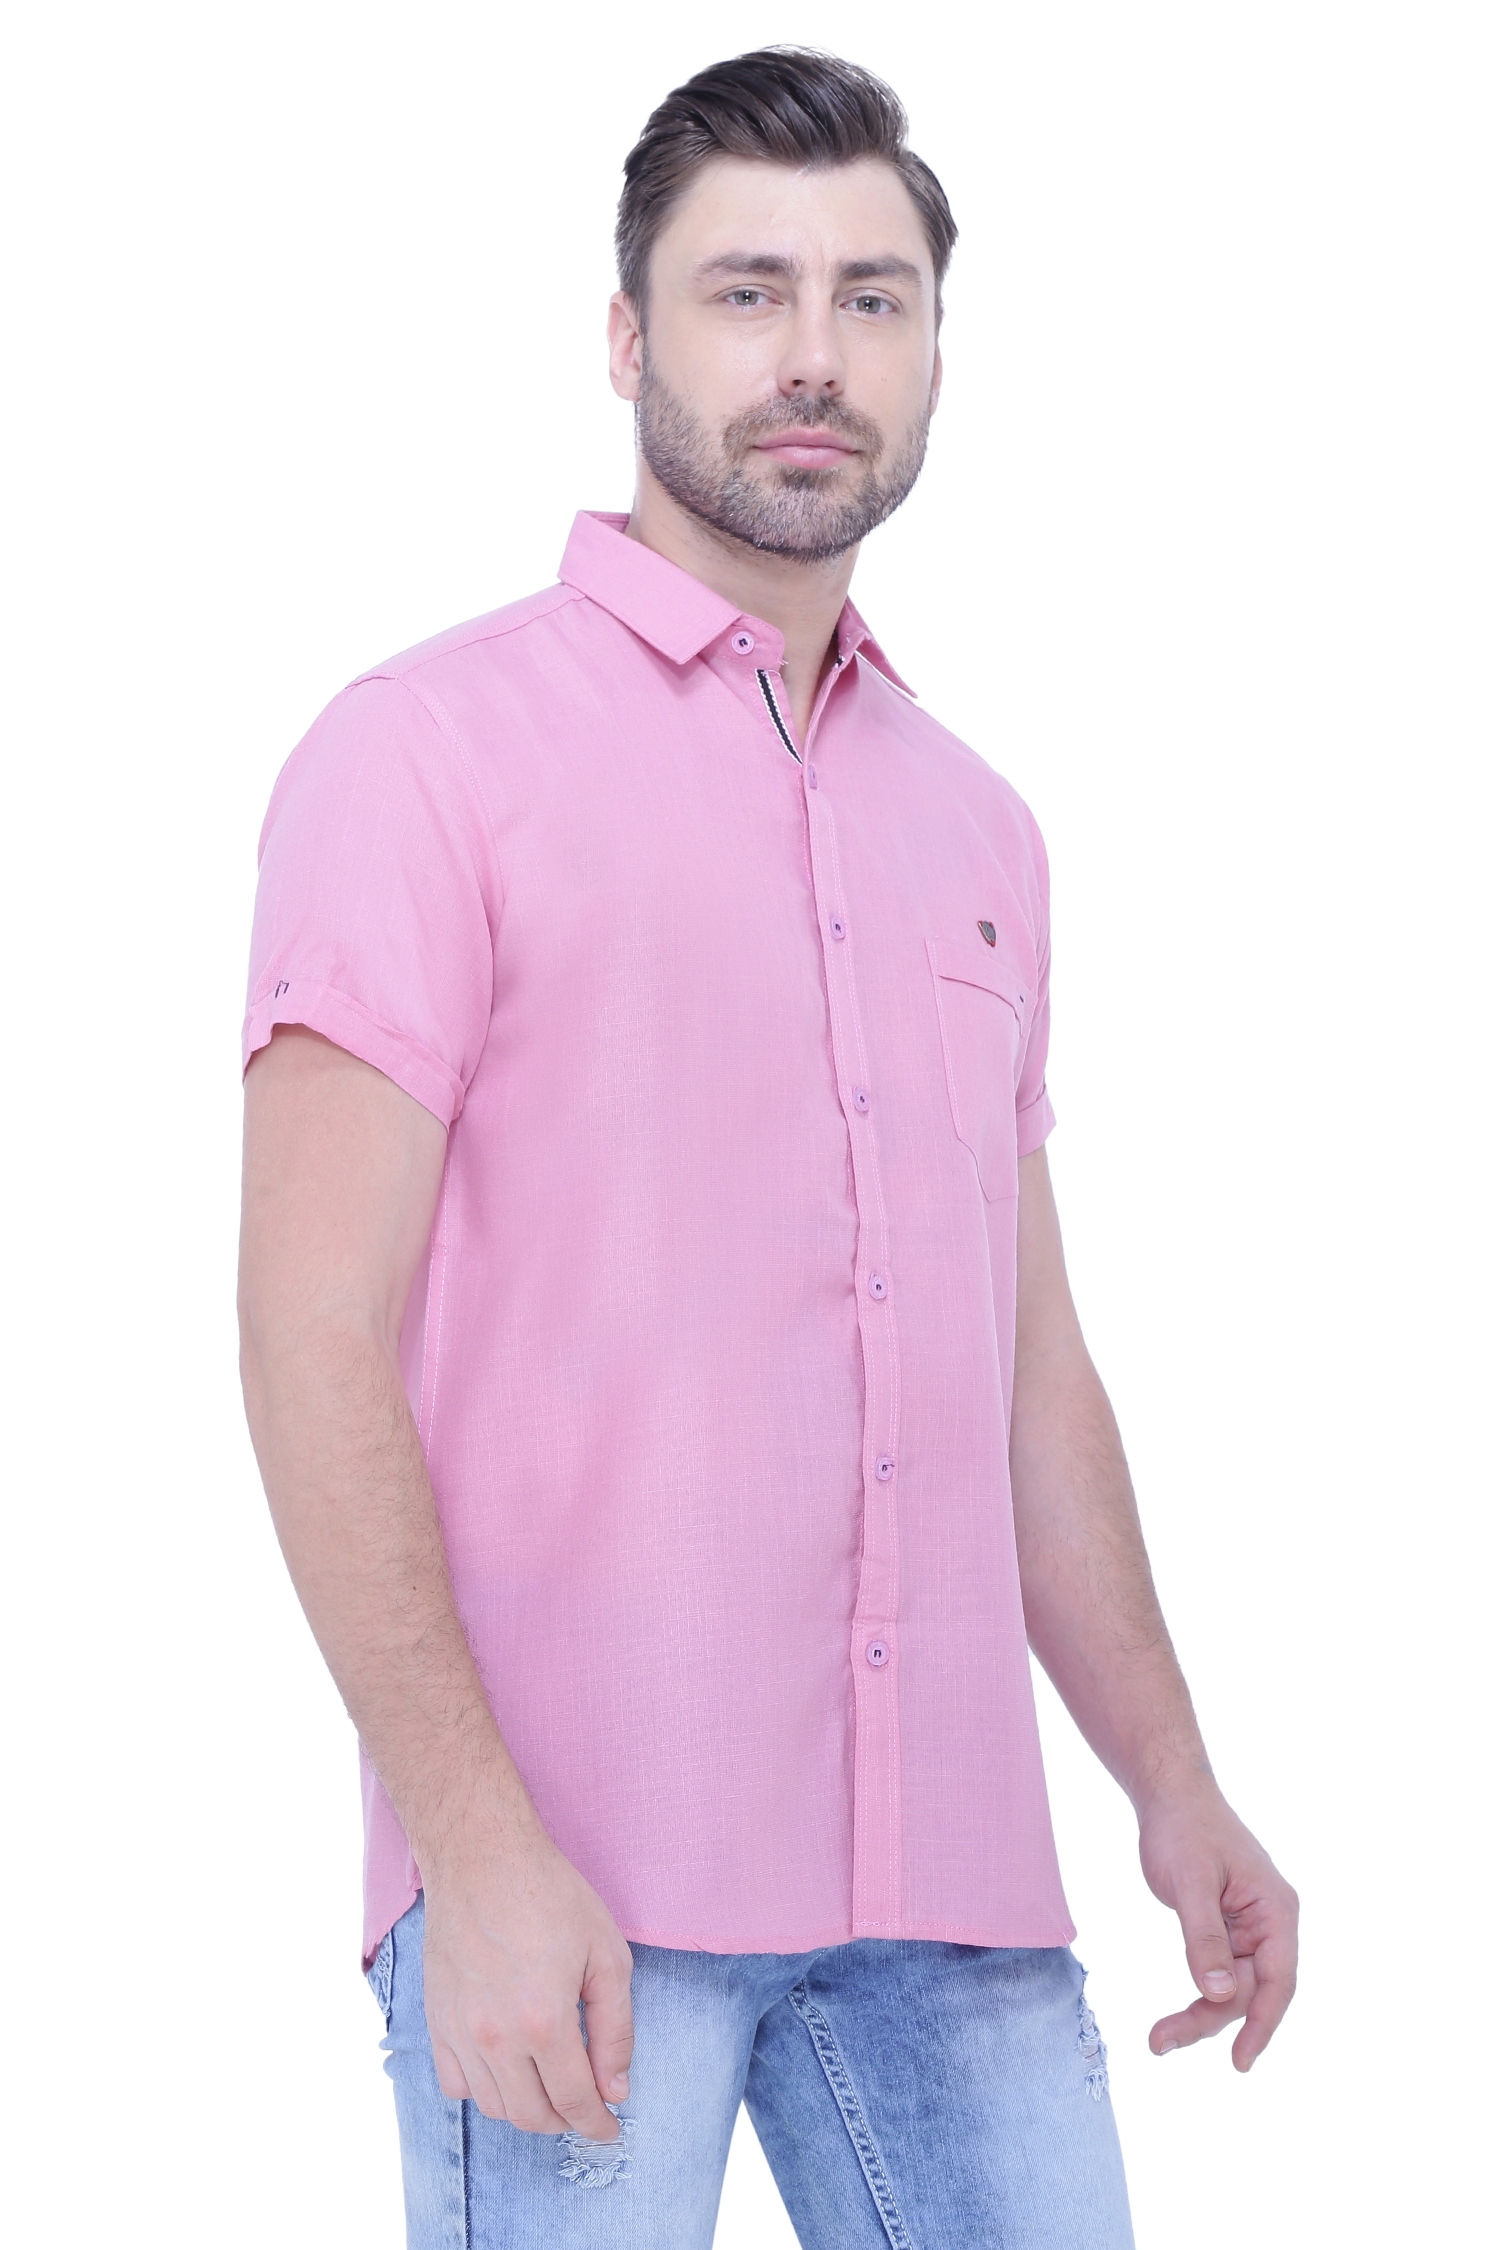 Kuons Avenue | Kuons Avenue Men's Linen Blend Half Sleeves Casual Shirt-KACLHS1232 5